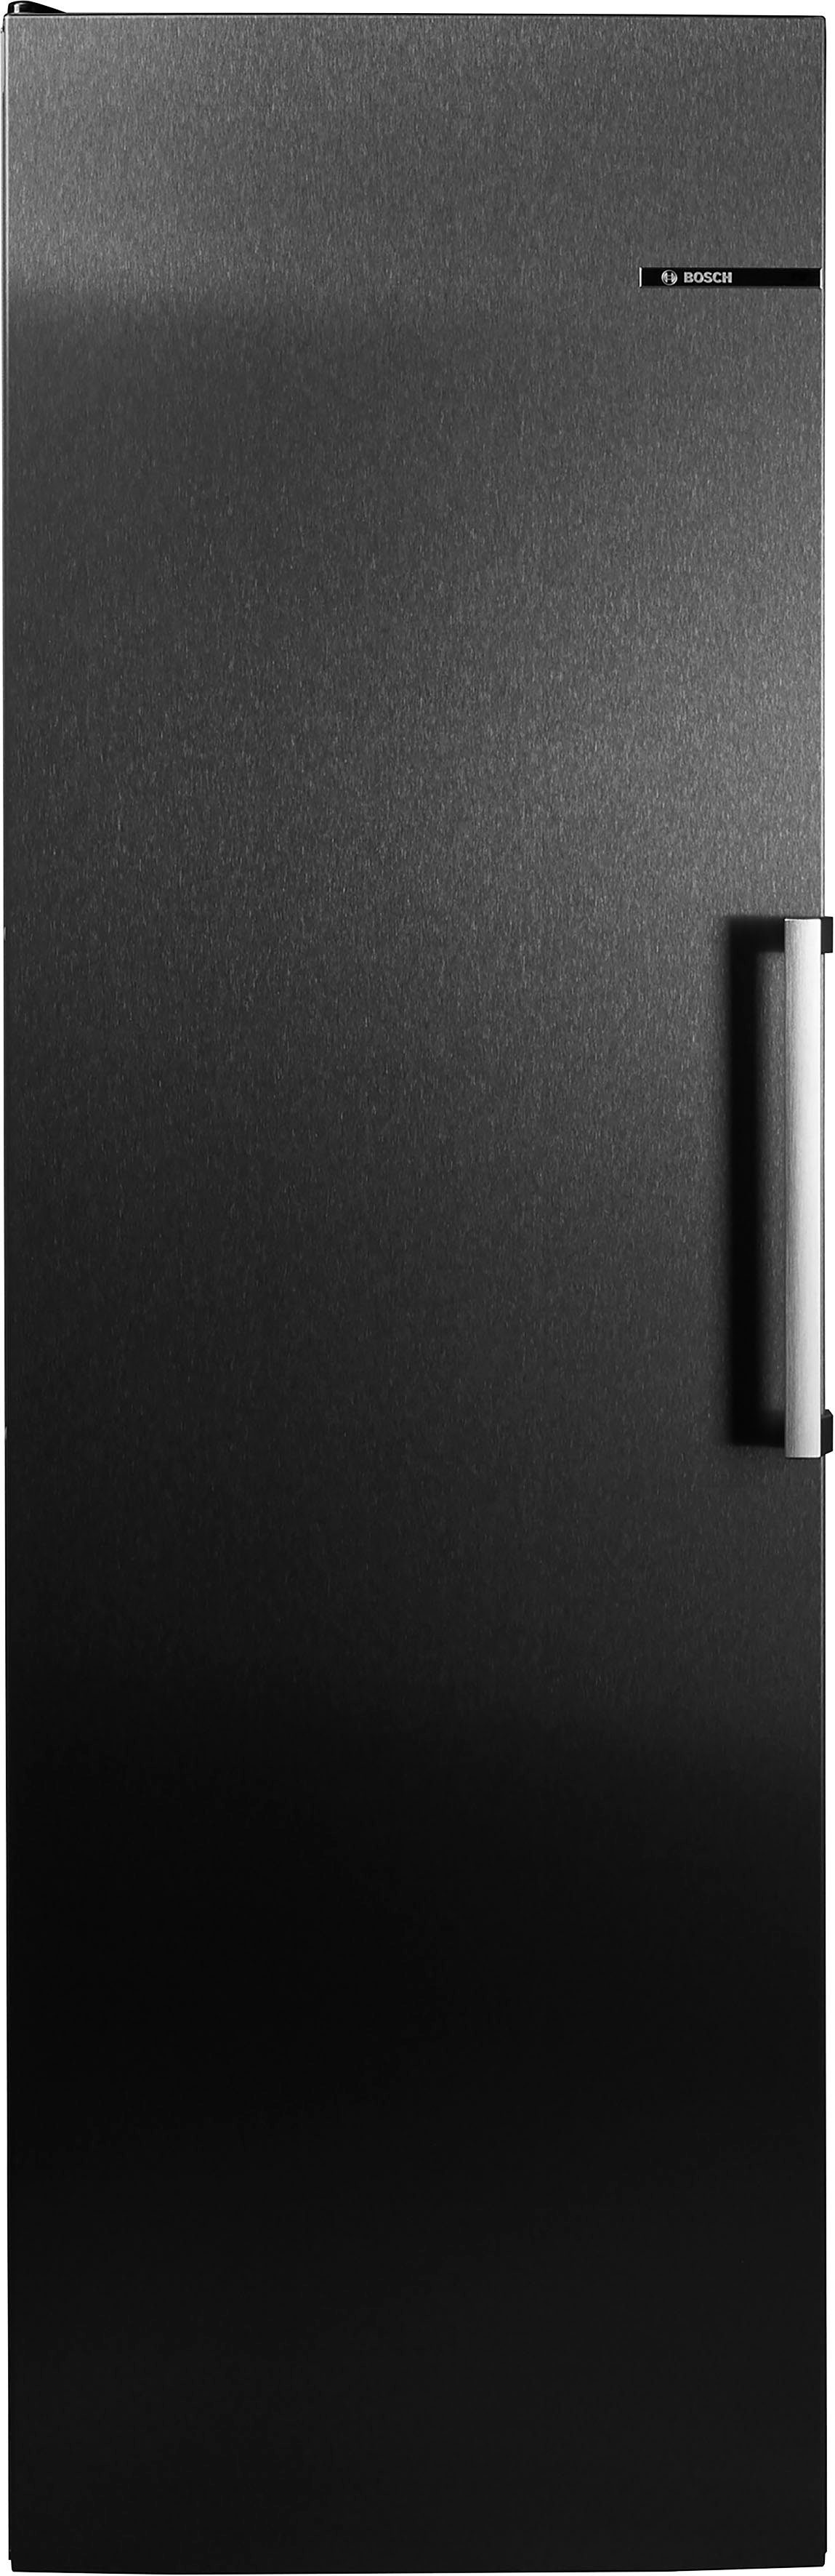 BOSCH Kühlschrank KSV36VXEP, breit 60 cm hoch, cm 186